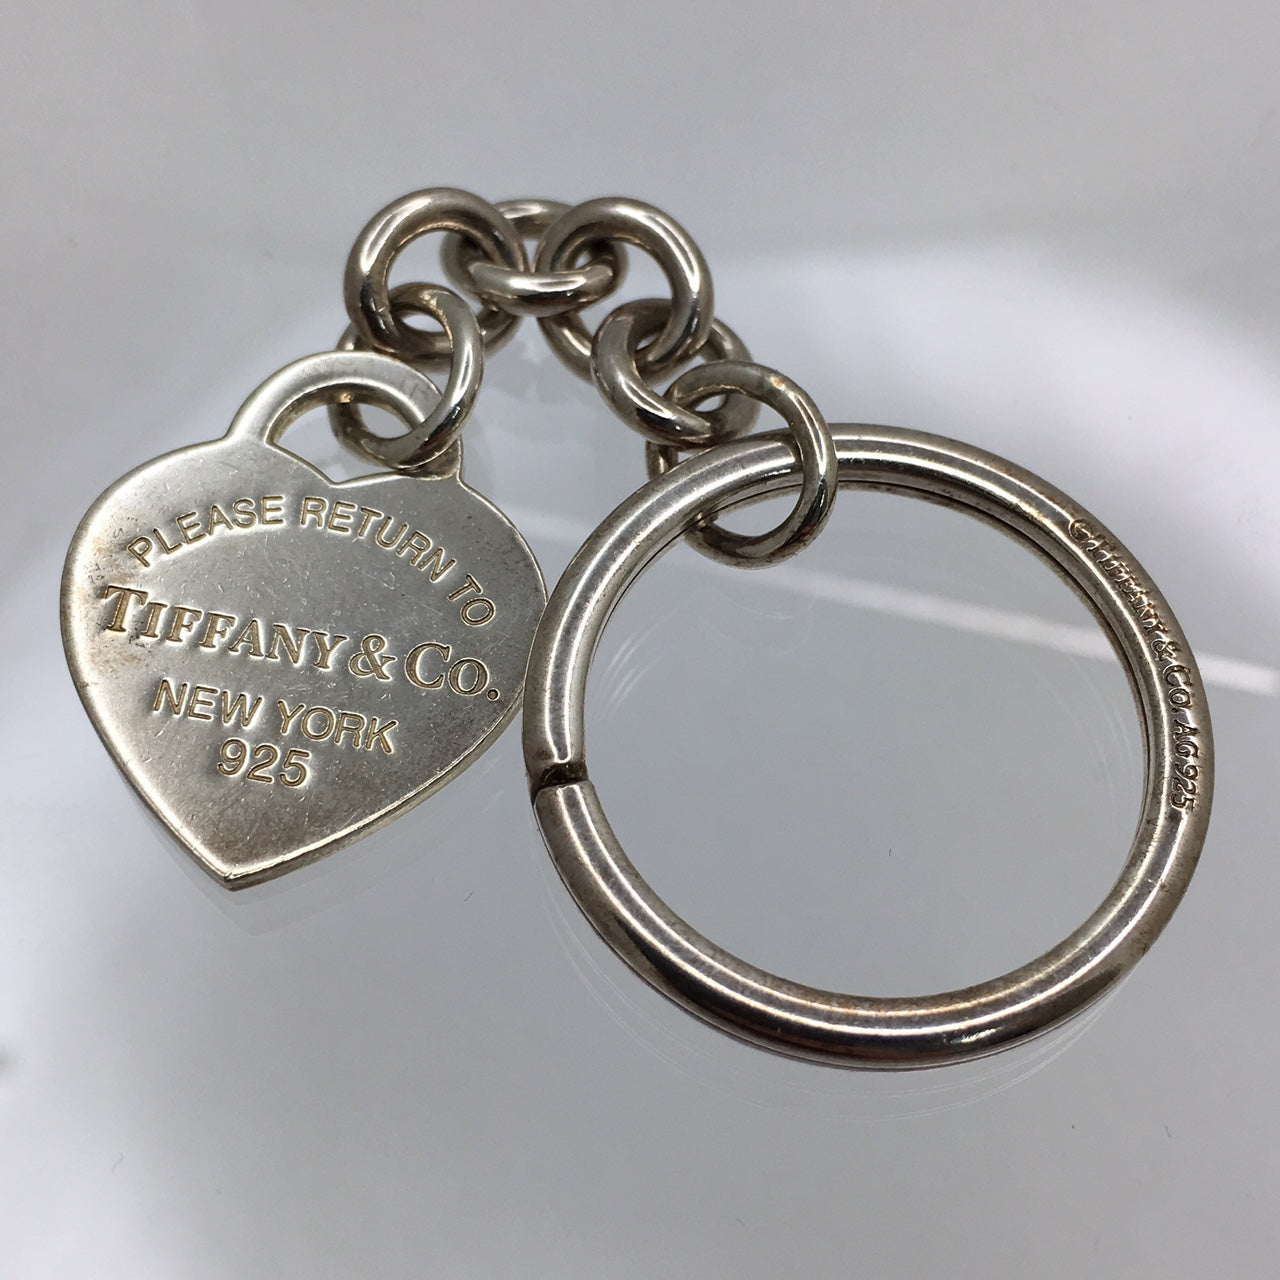 Vintage Tiffany & Co. 925 Coin Edge Dog Tag, C 2003, 24 Inch Chain Tiffany Ball (Copy)